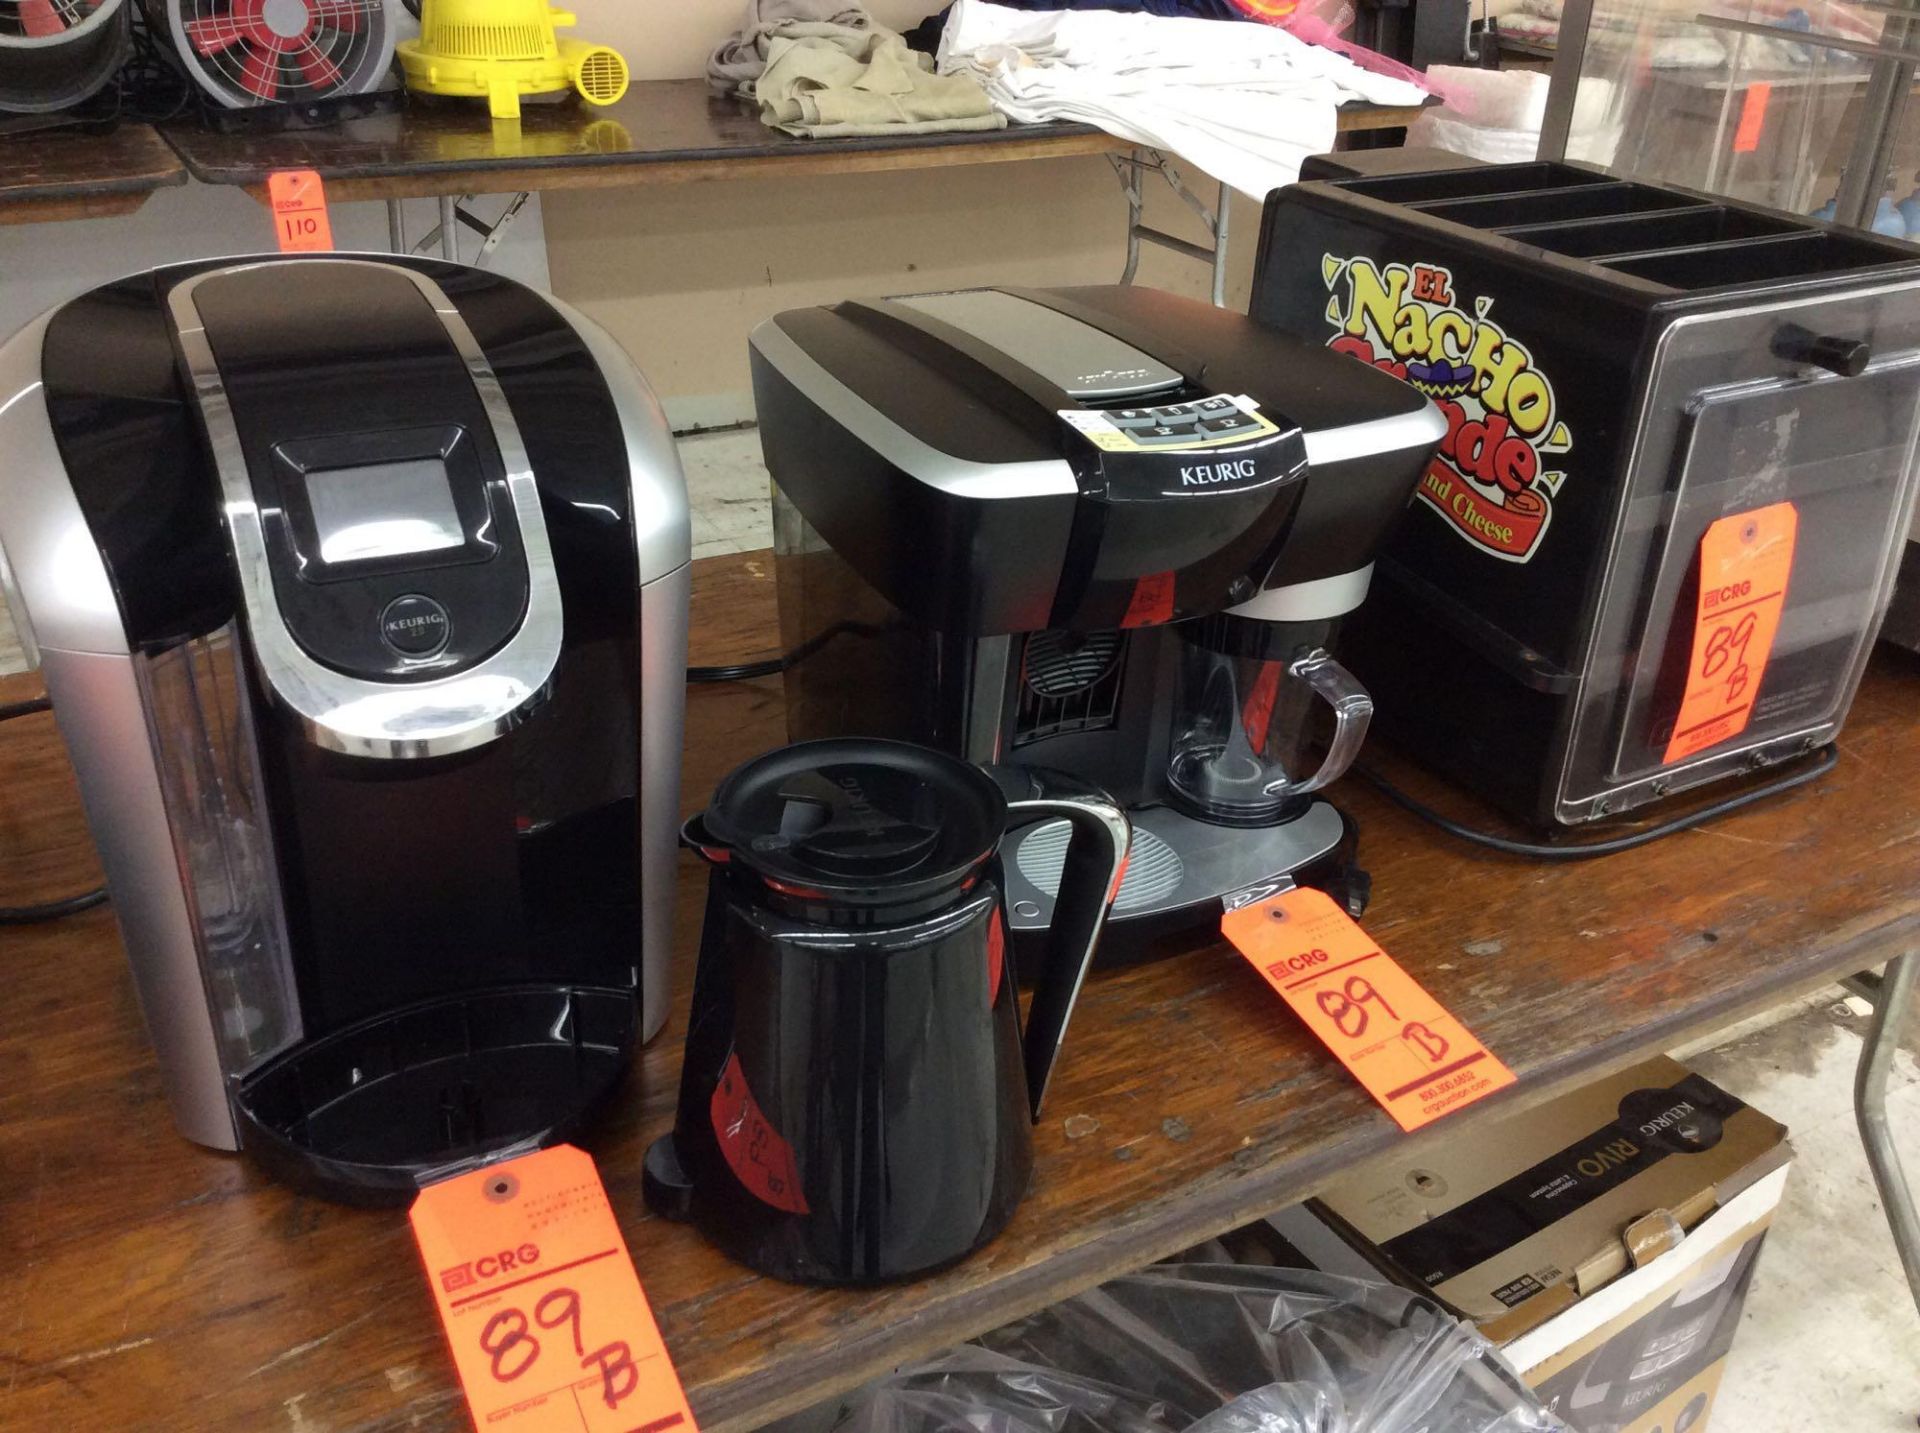 Lot - includes (1) Keurig coffee maker w/dispensing pot, (1) Keurig cappuccino/latte maker, and (